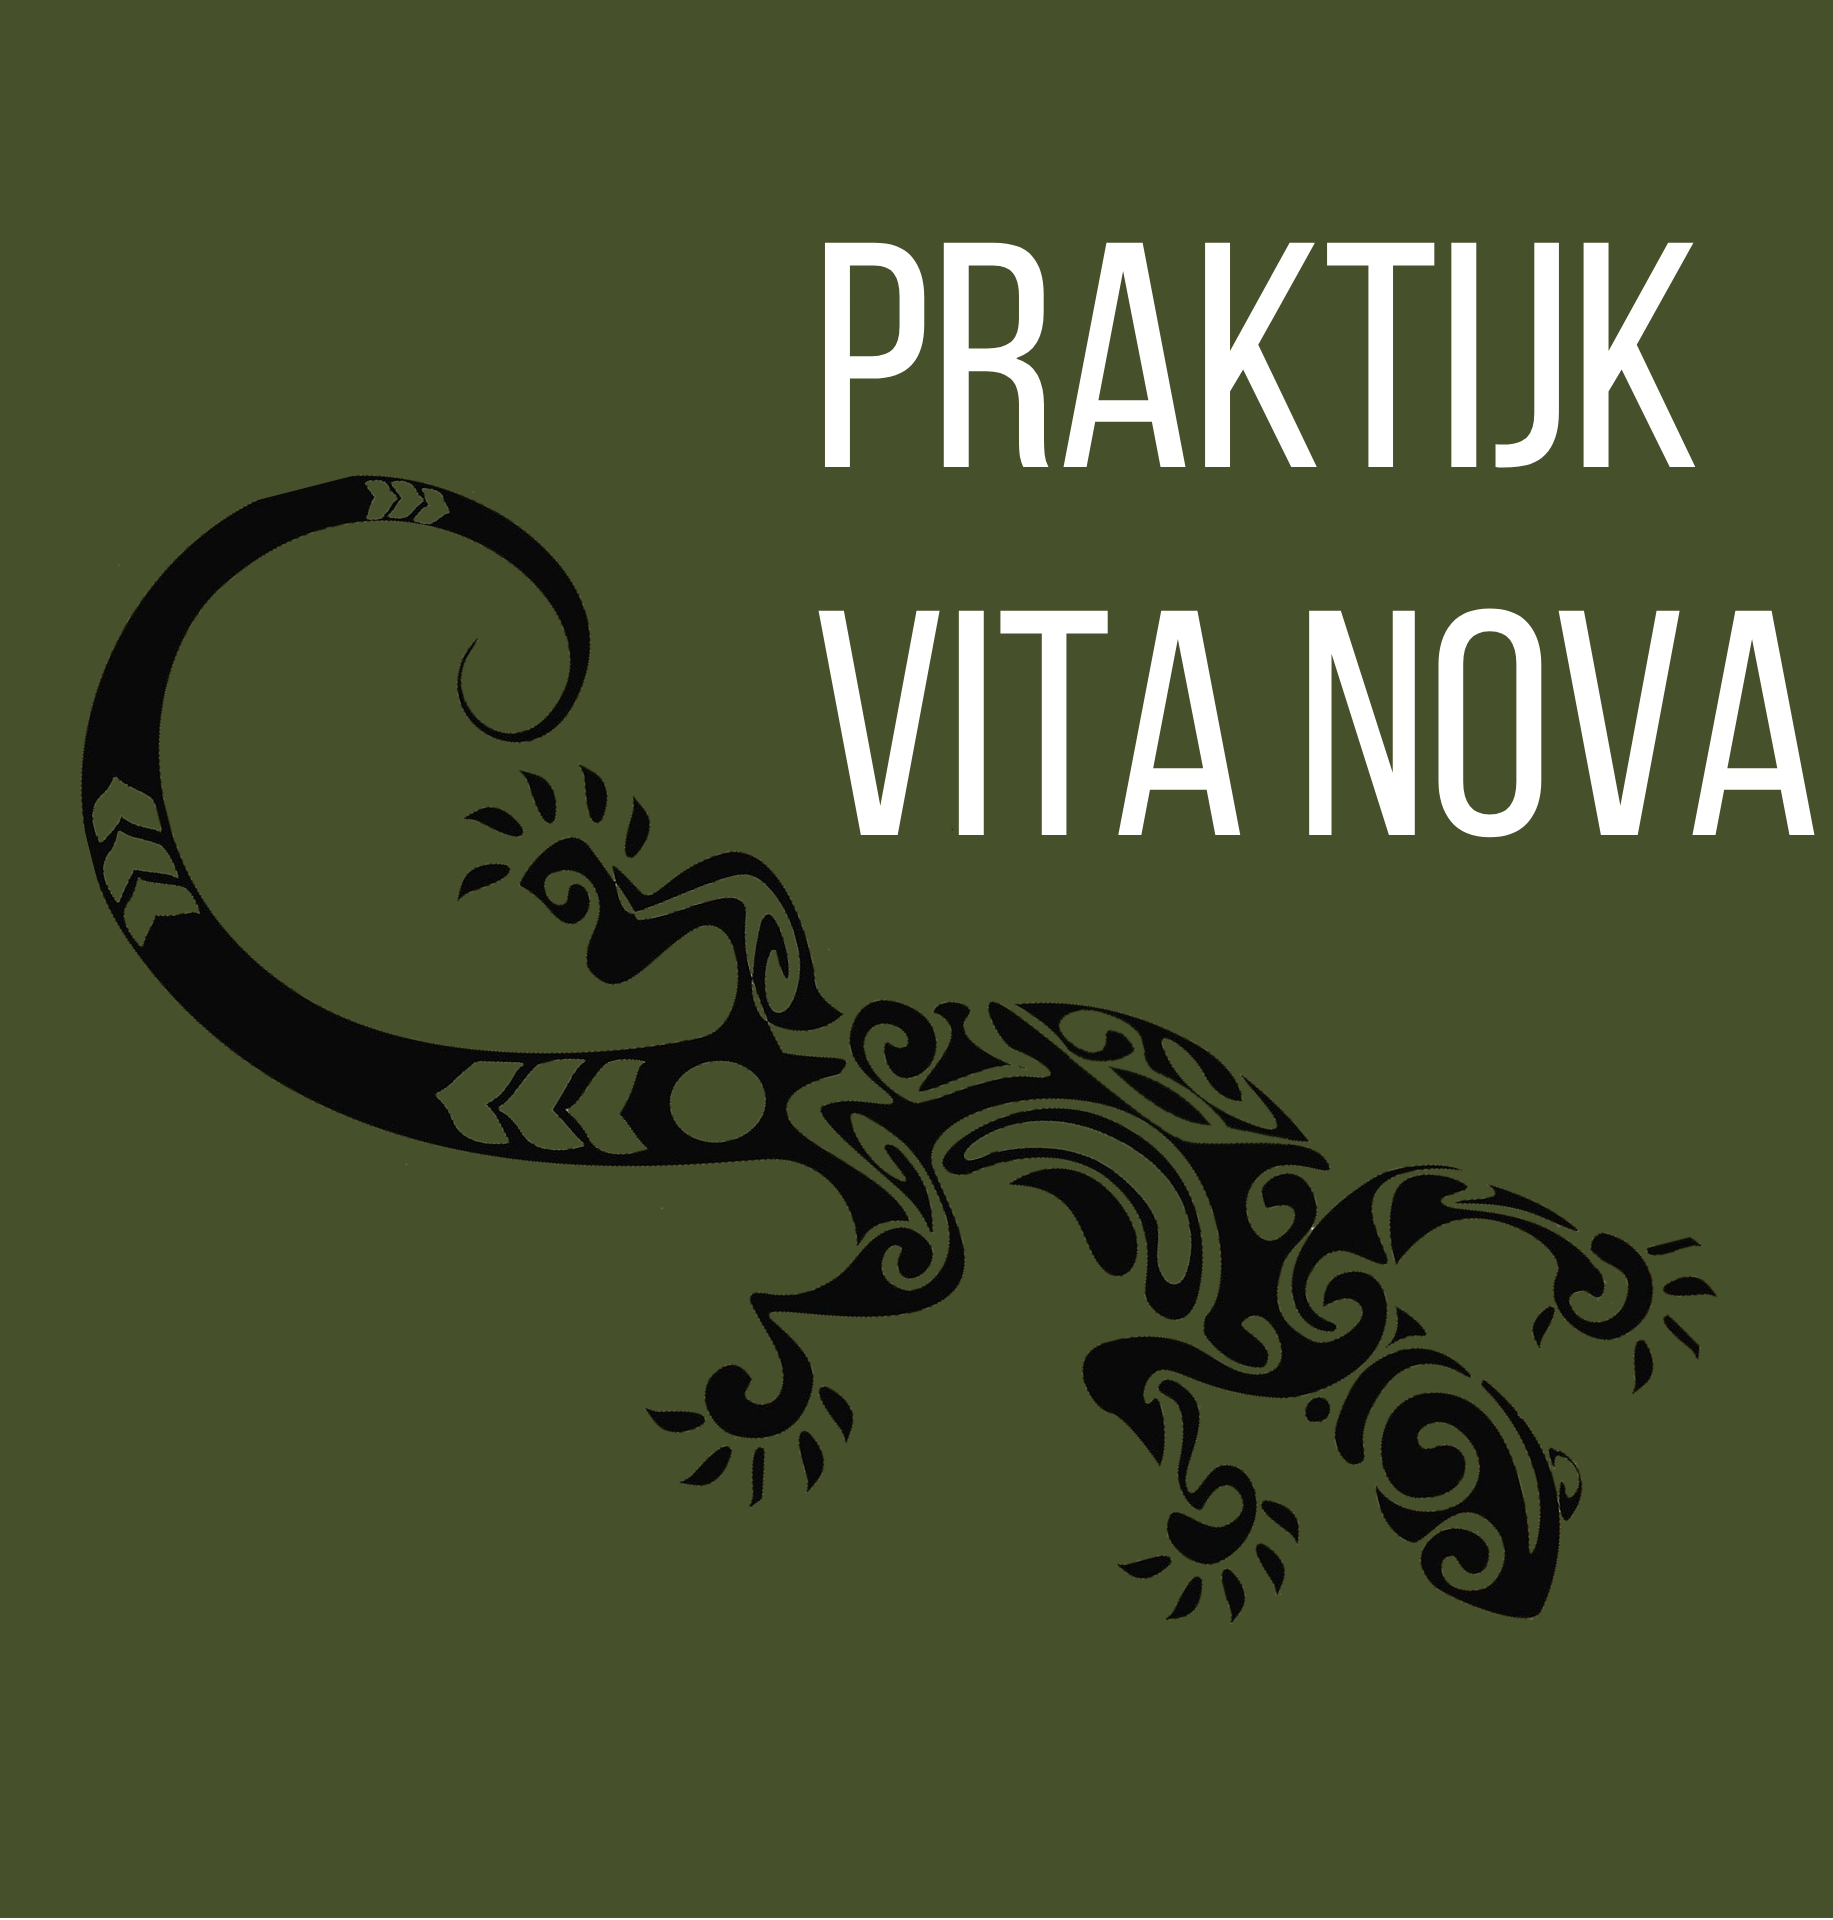 Praktijk Vita Nova